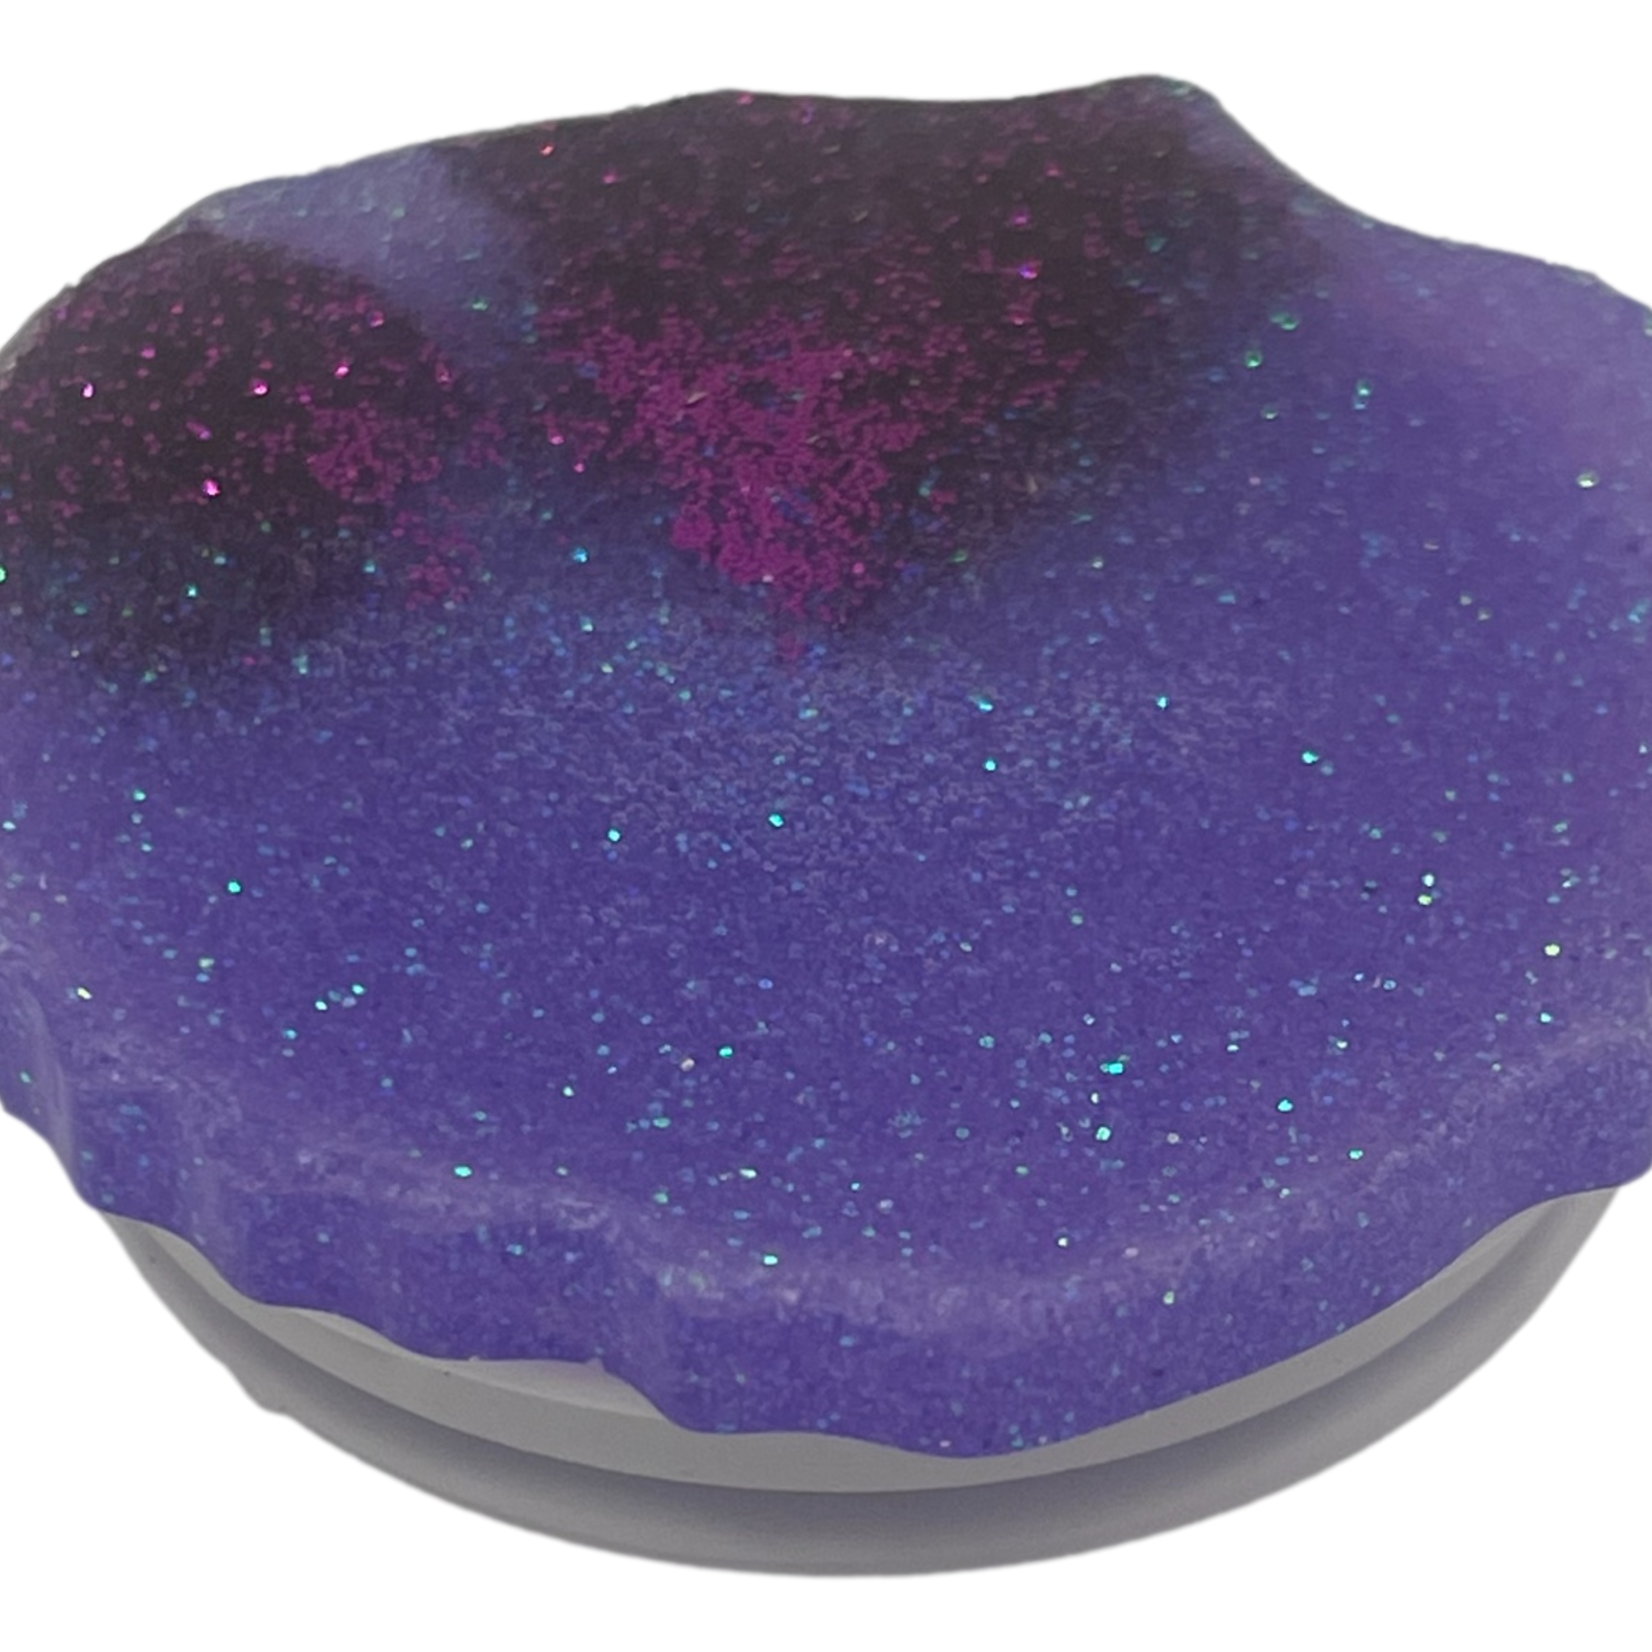 East Coast Sirens Geode-shaped Purple Glitter Phone Grip